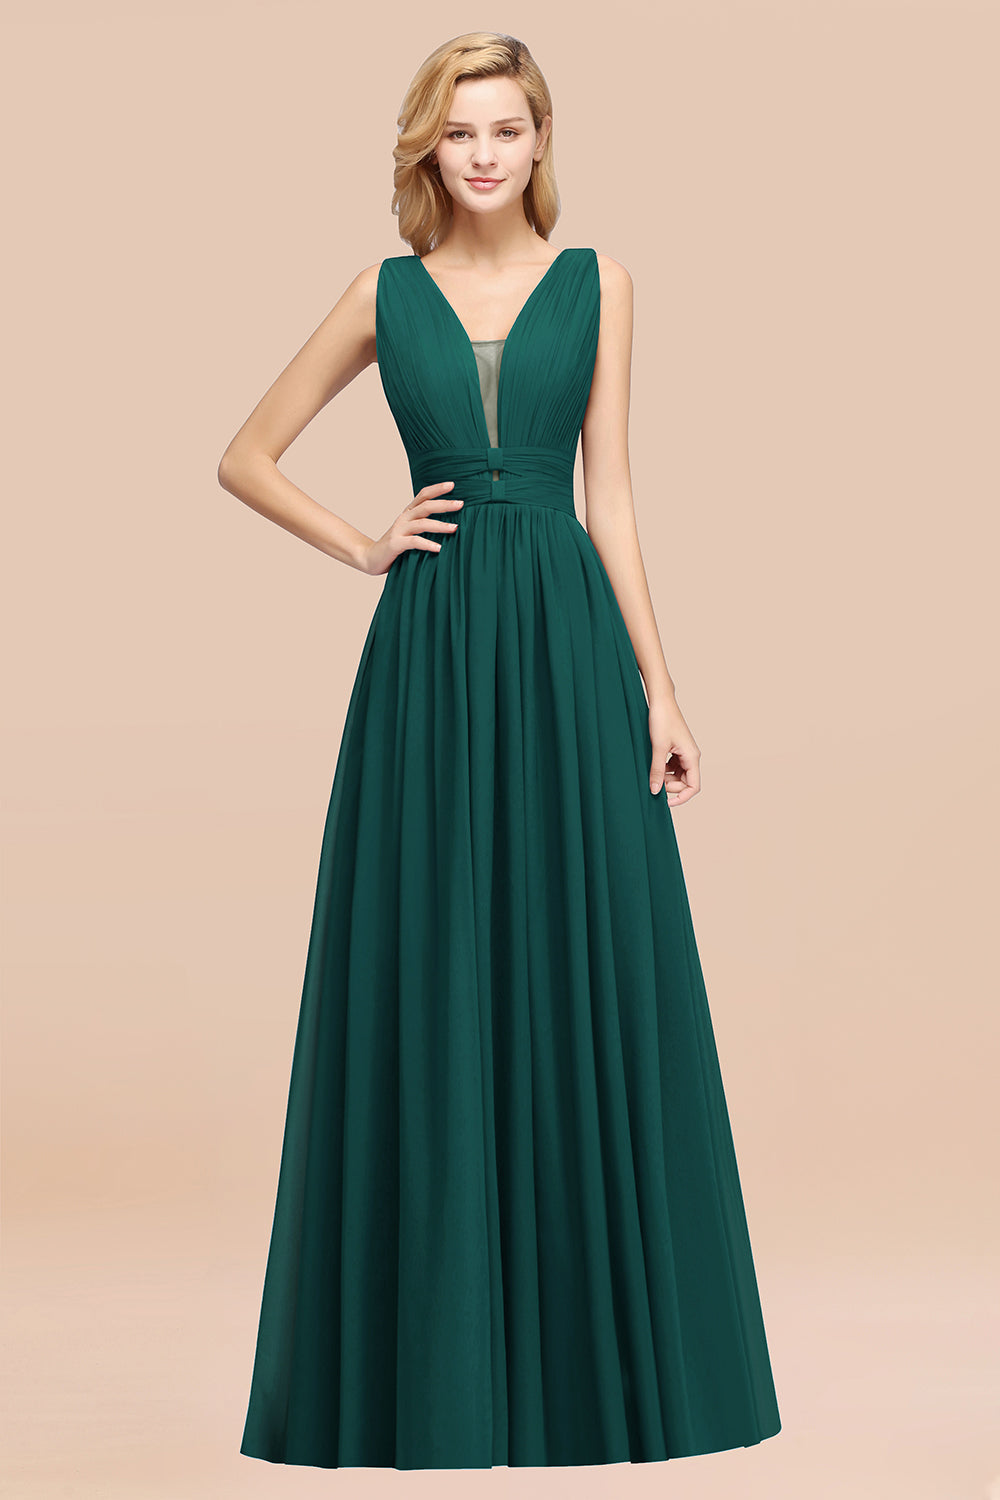 Modest Dark Green Long Bridesmaid Dress Deep V-Neck Chiffon Maid of Honor Dress-27dress